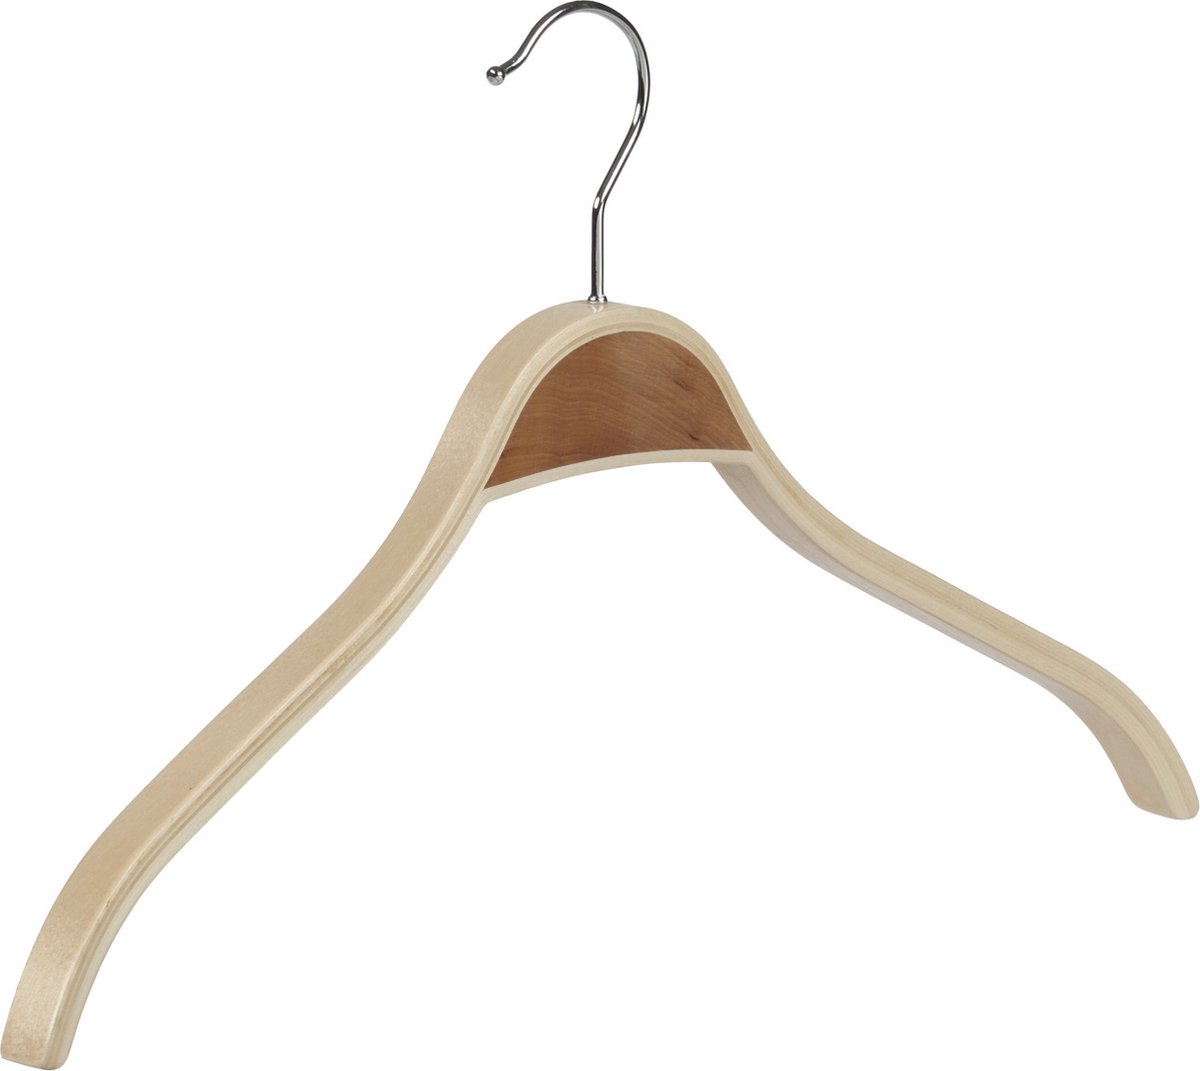 De Kledinghanger Gigant - 6 x Mantel / kostuumhanger berkenhout naturel gelakt met schouderverbreding, 42 cm